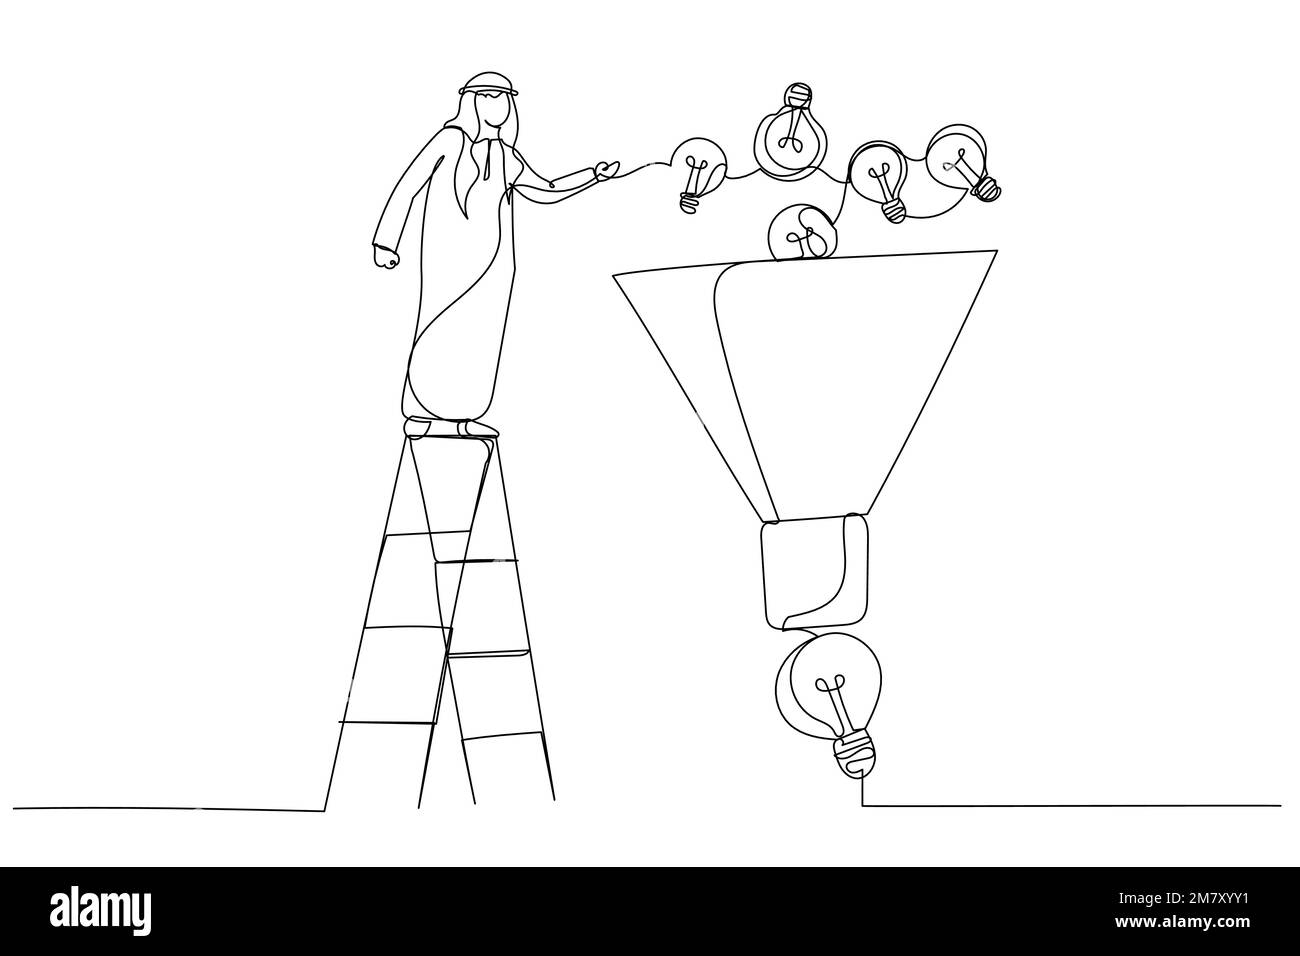 Illustration of arab businessman help put small lightbulb in funnel to get final idea. Idea funnel. Single line art style Stock Vector